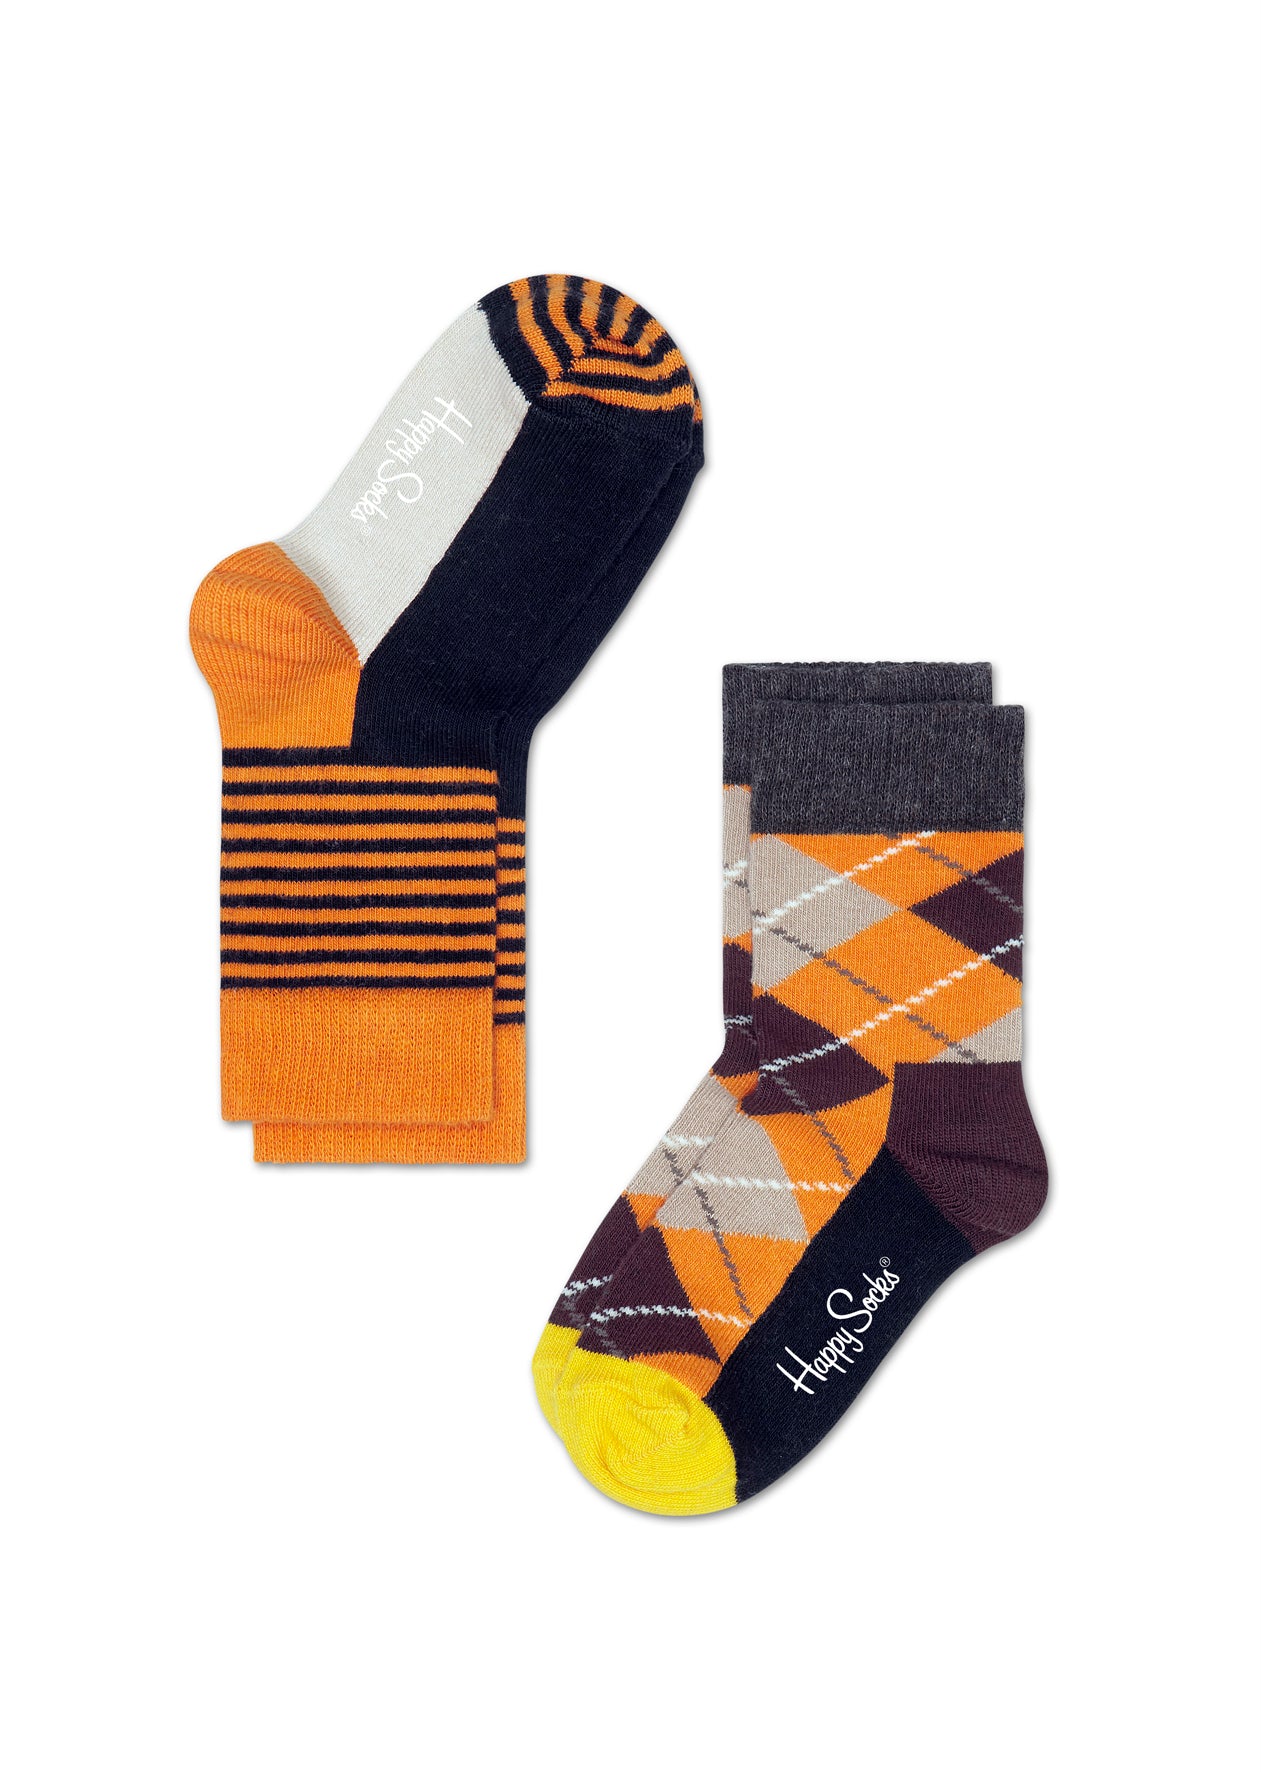 Detské farebné ponožky Happy Socks, dva páry - proužky a káry